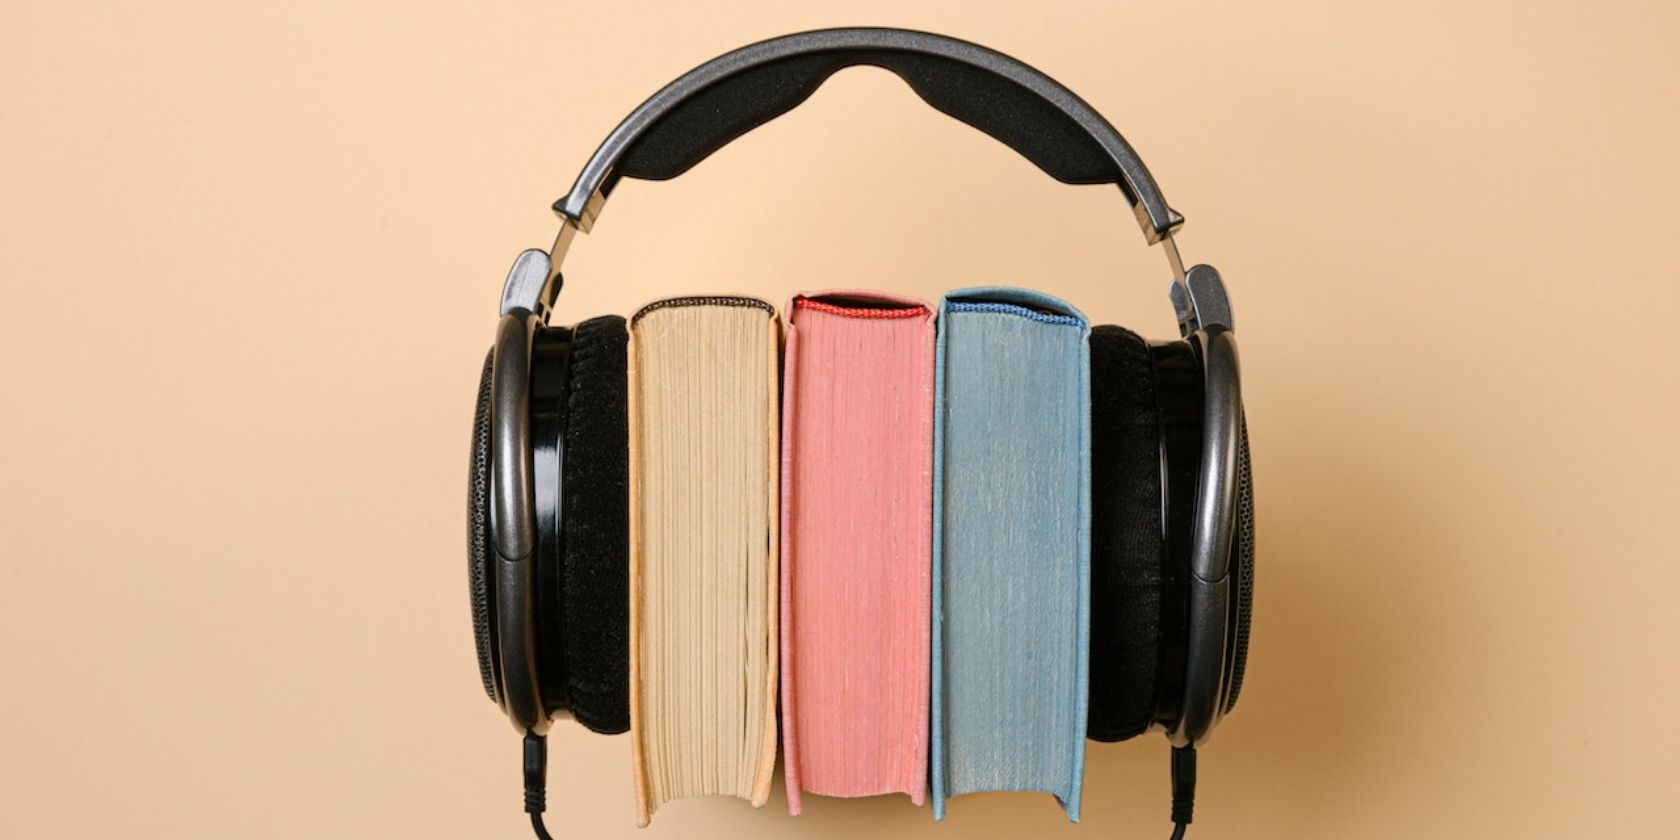 Black headphones with three books in between